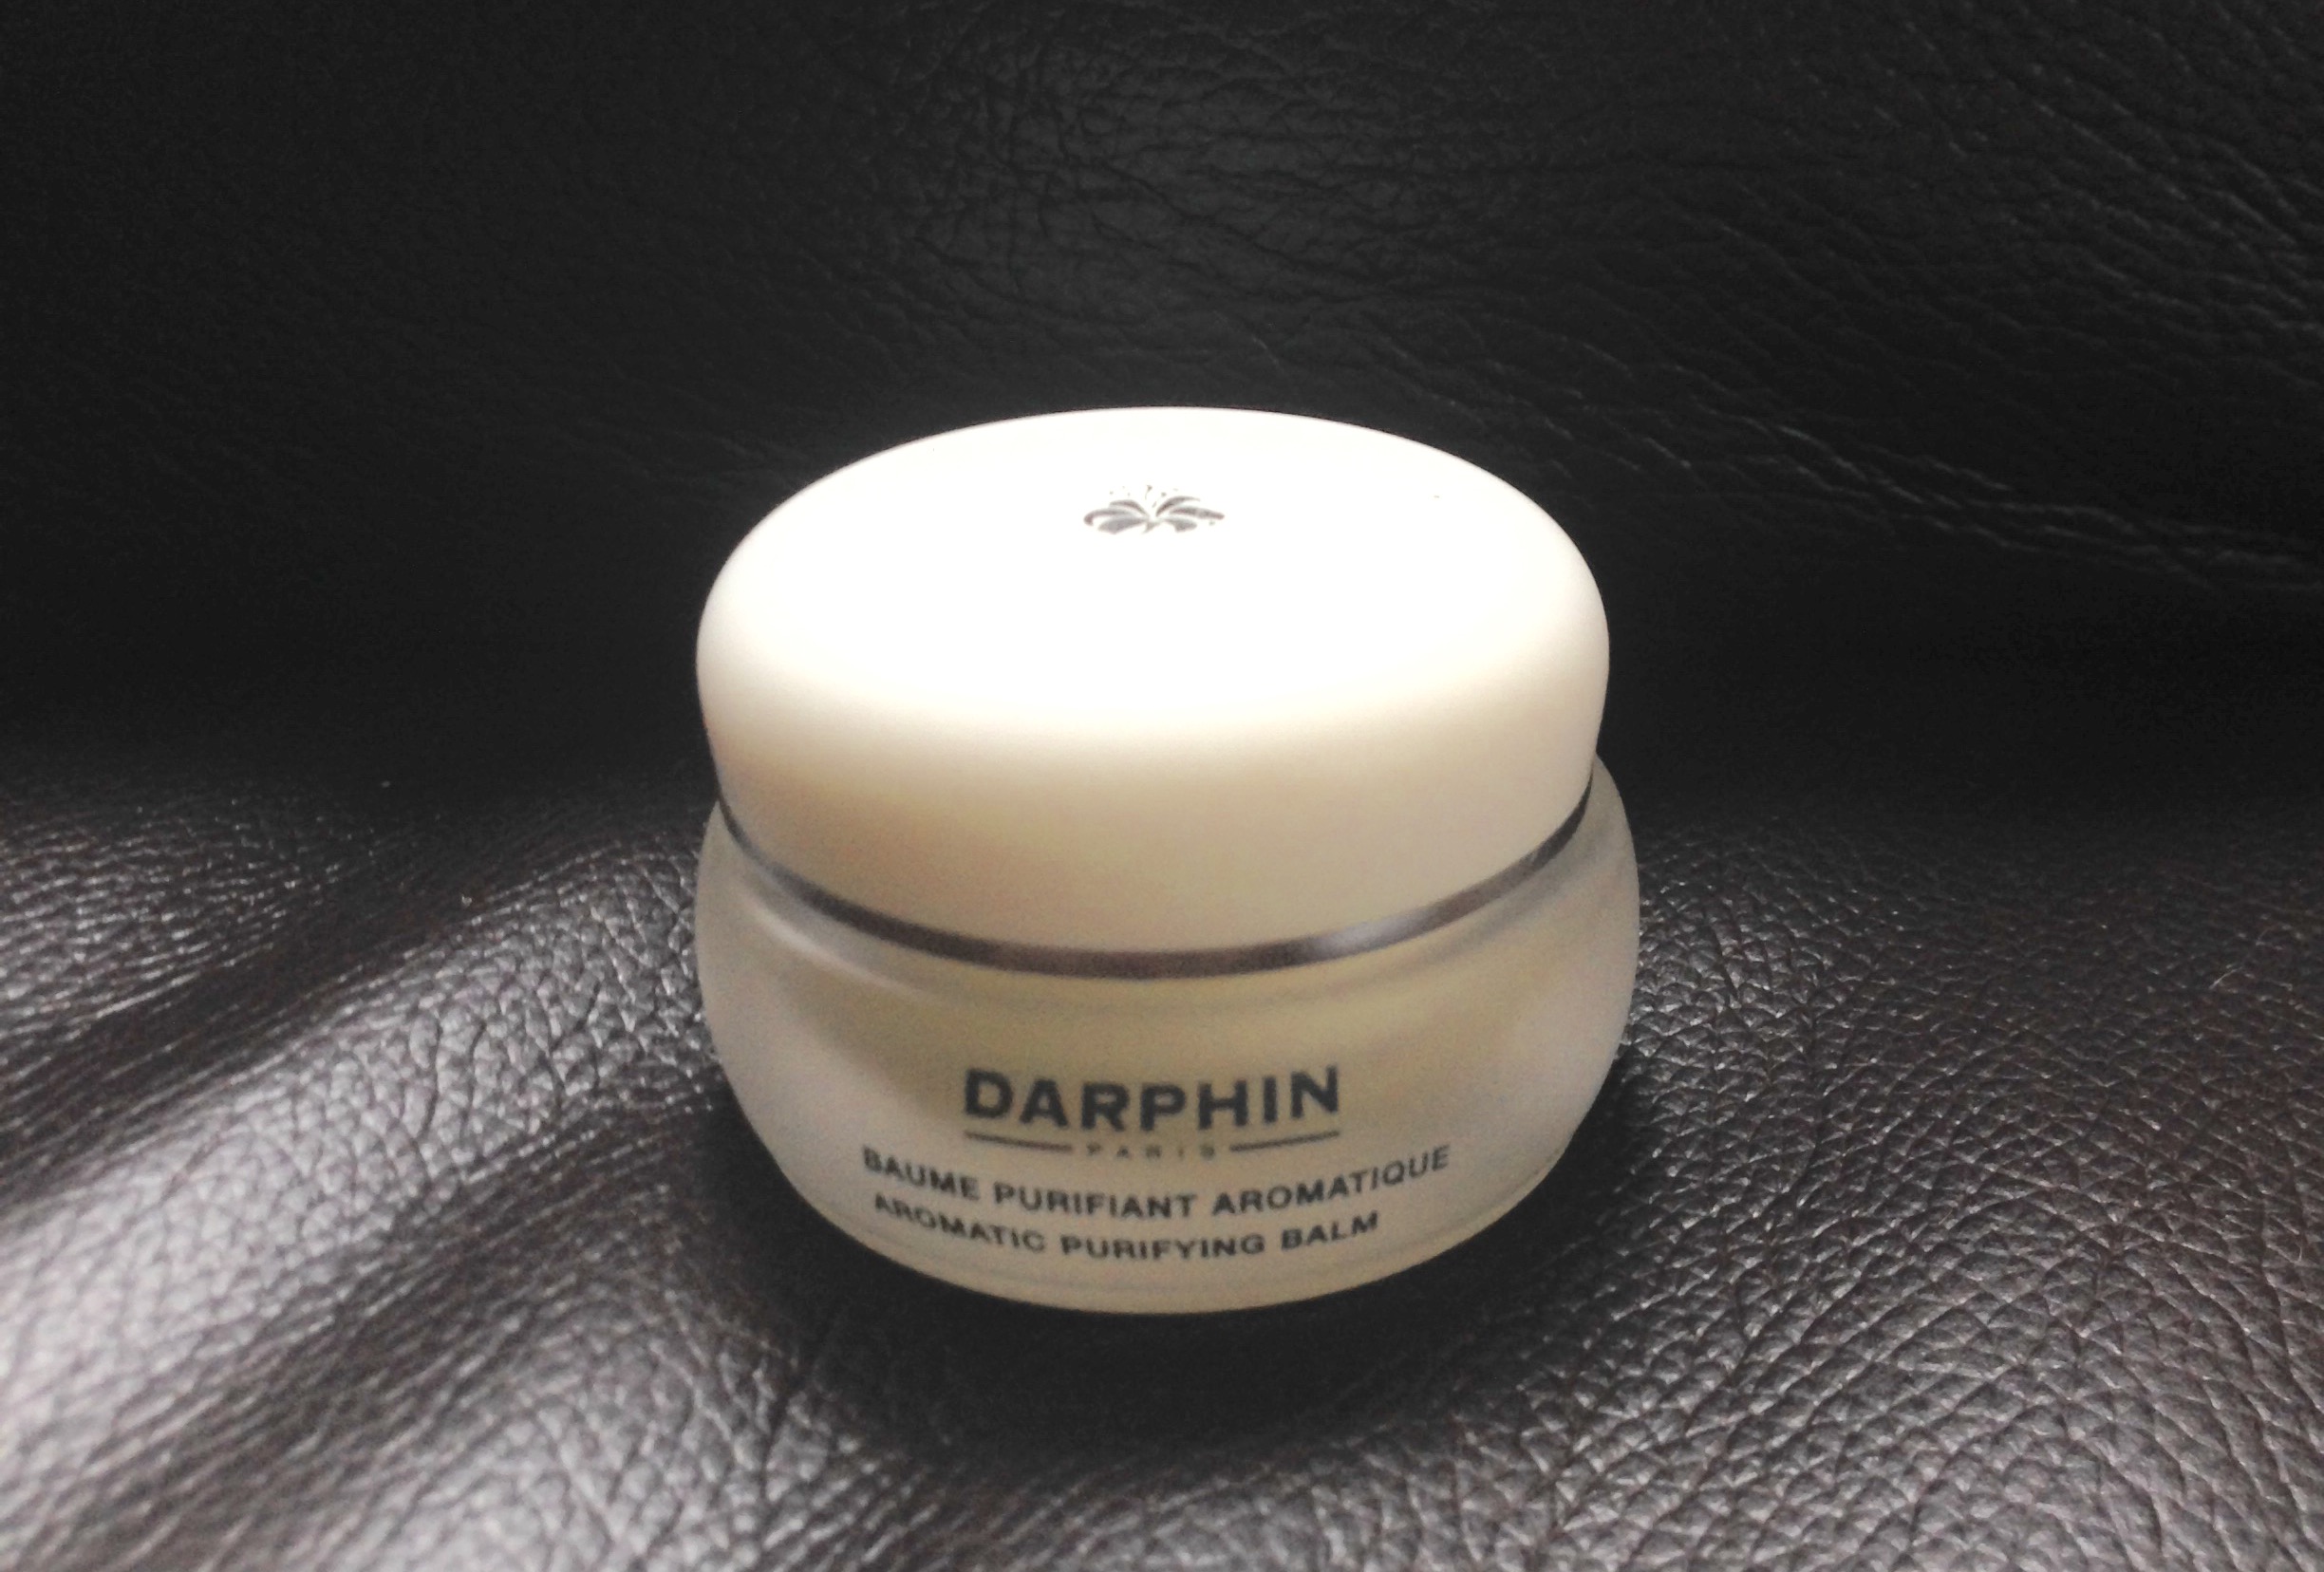 REVIEW: Darphin Aromatic Purifying Balm - MICHXMASH